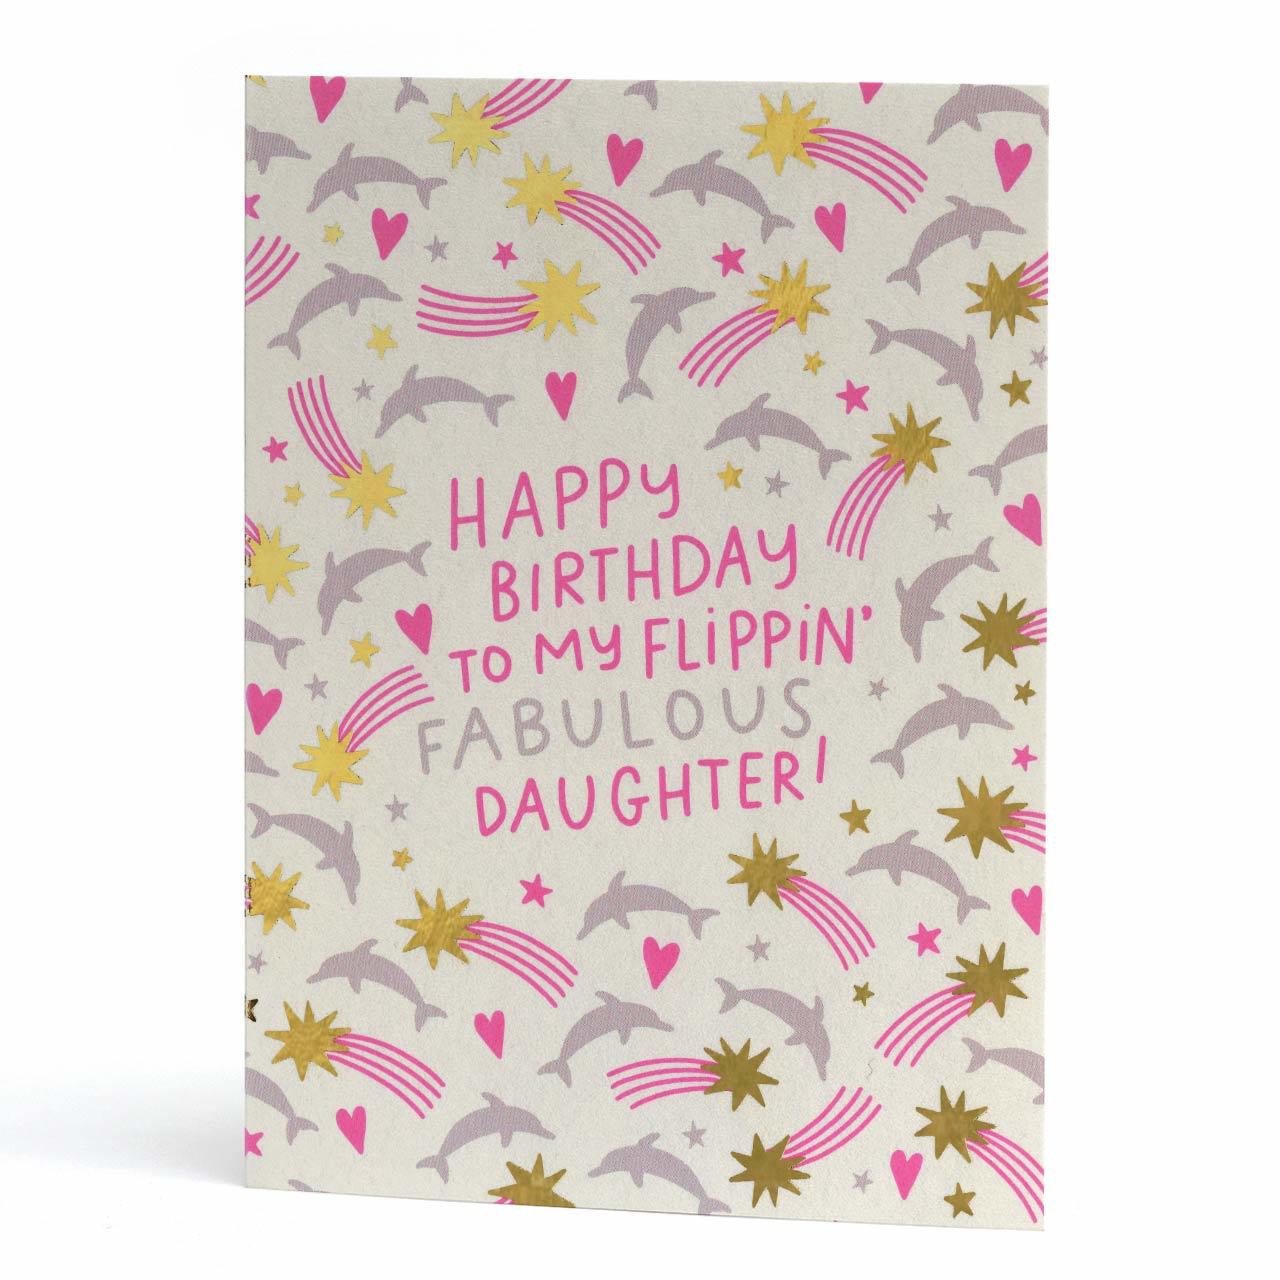 Flippin' Fabulous Daughter Gold Foil Birthday Card